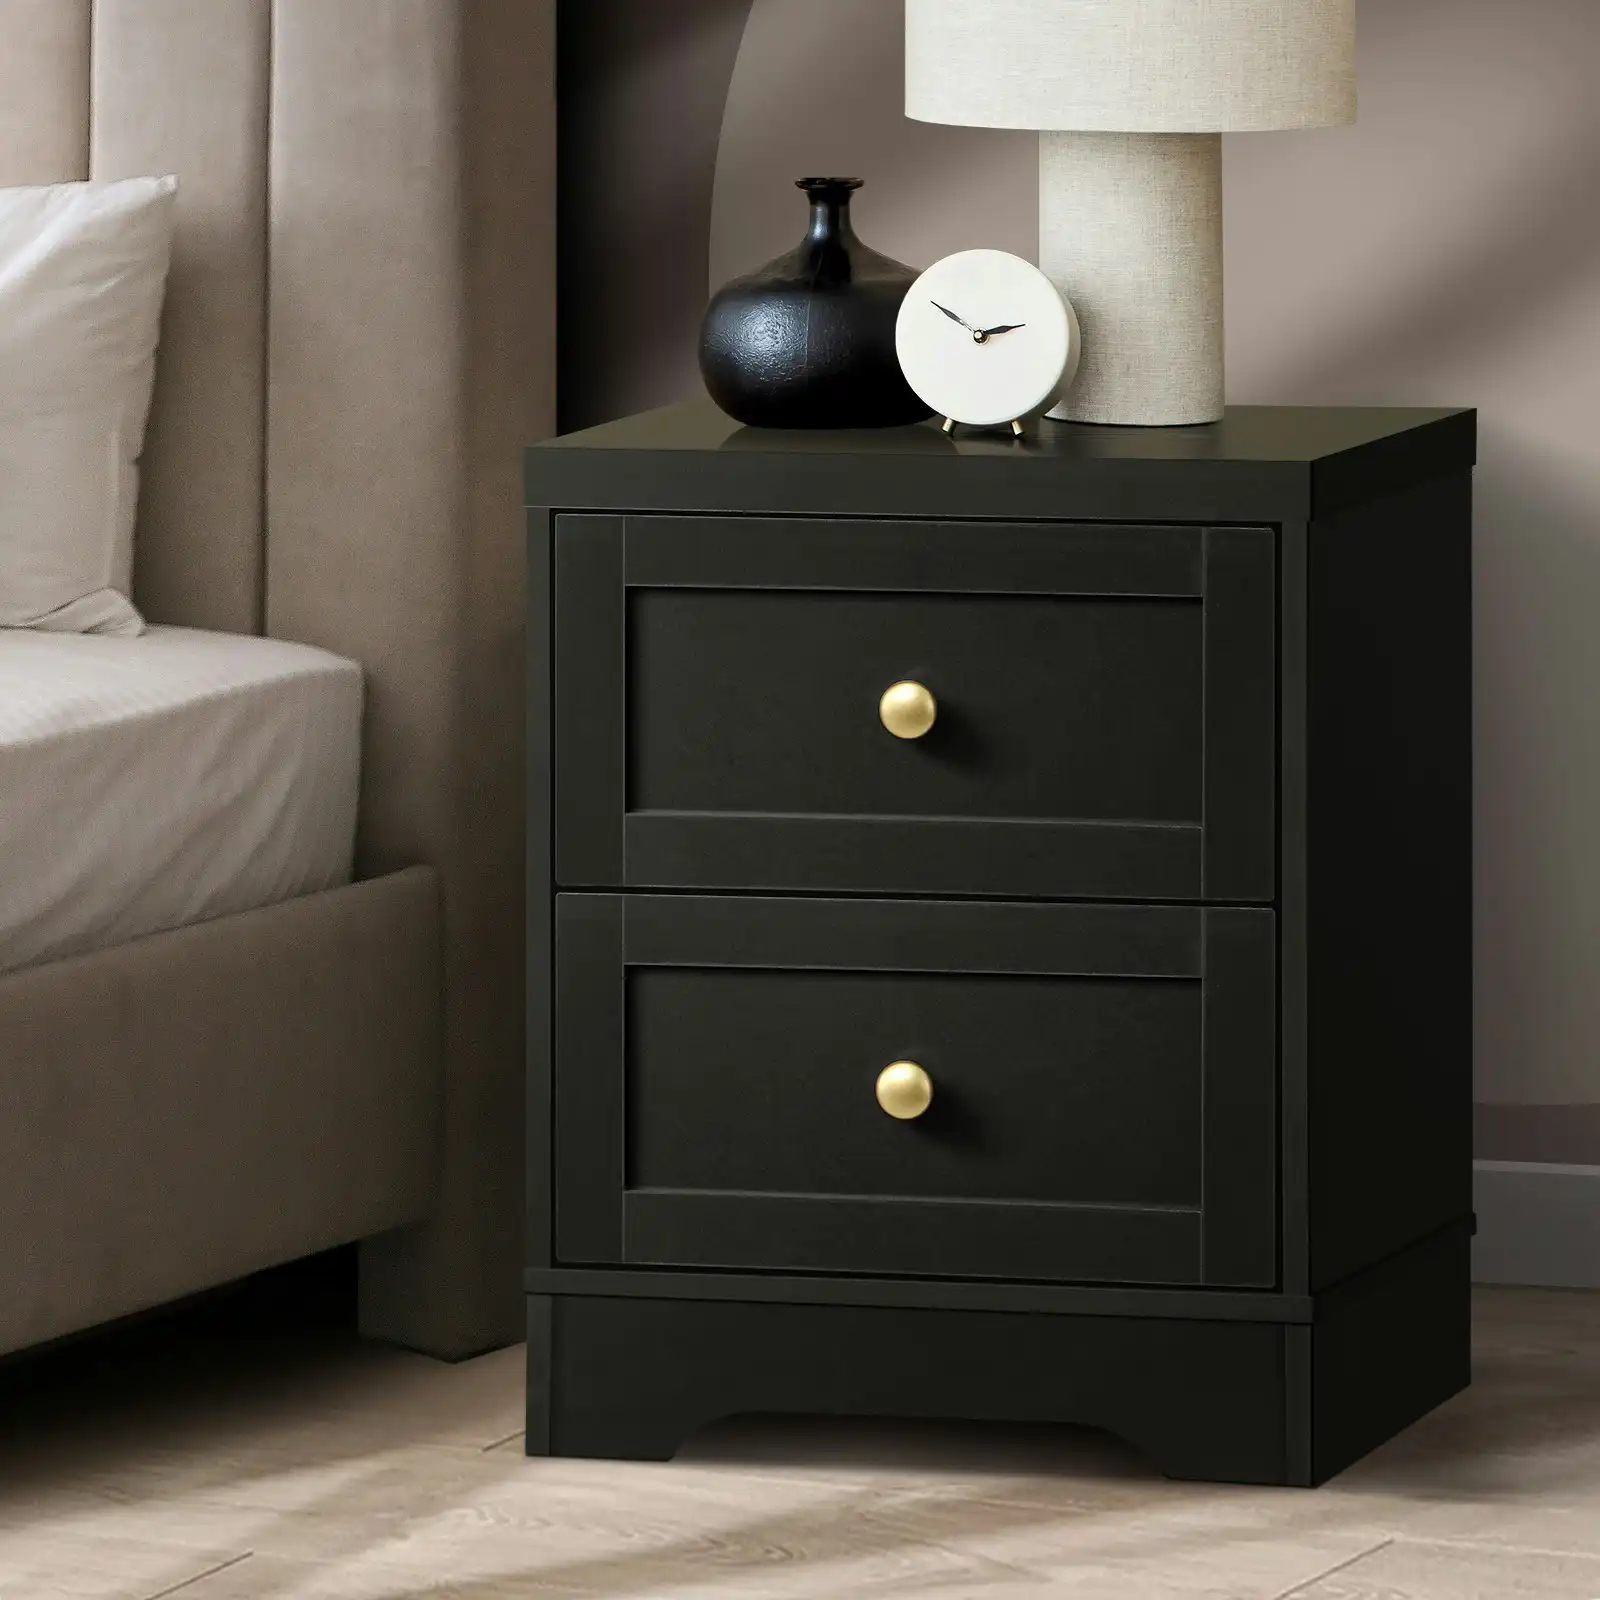 Oikiture Bedside Tables 2 Drawers Hamptons Furniture Storage Cabinet Black